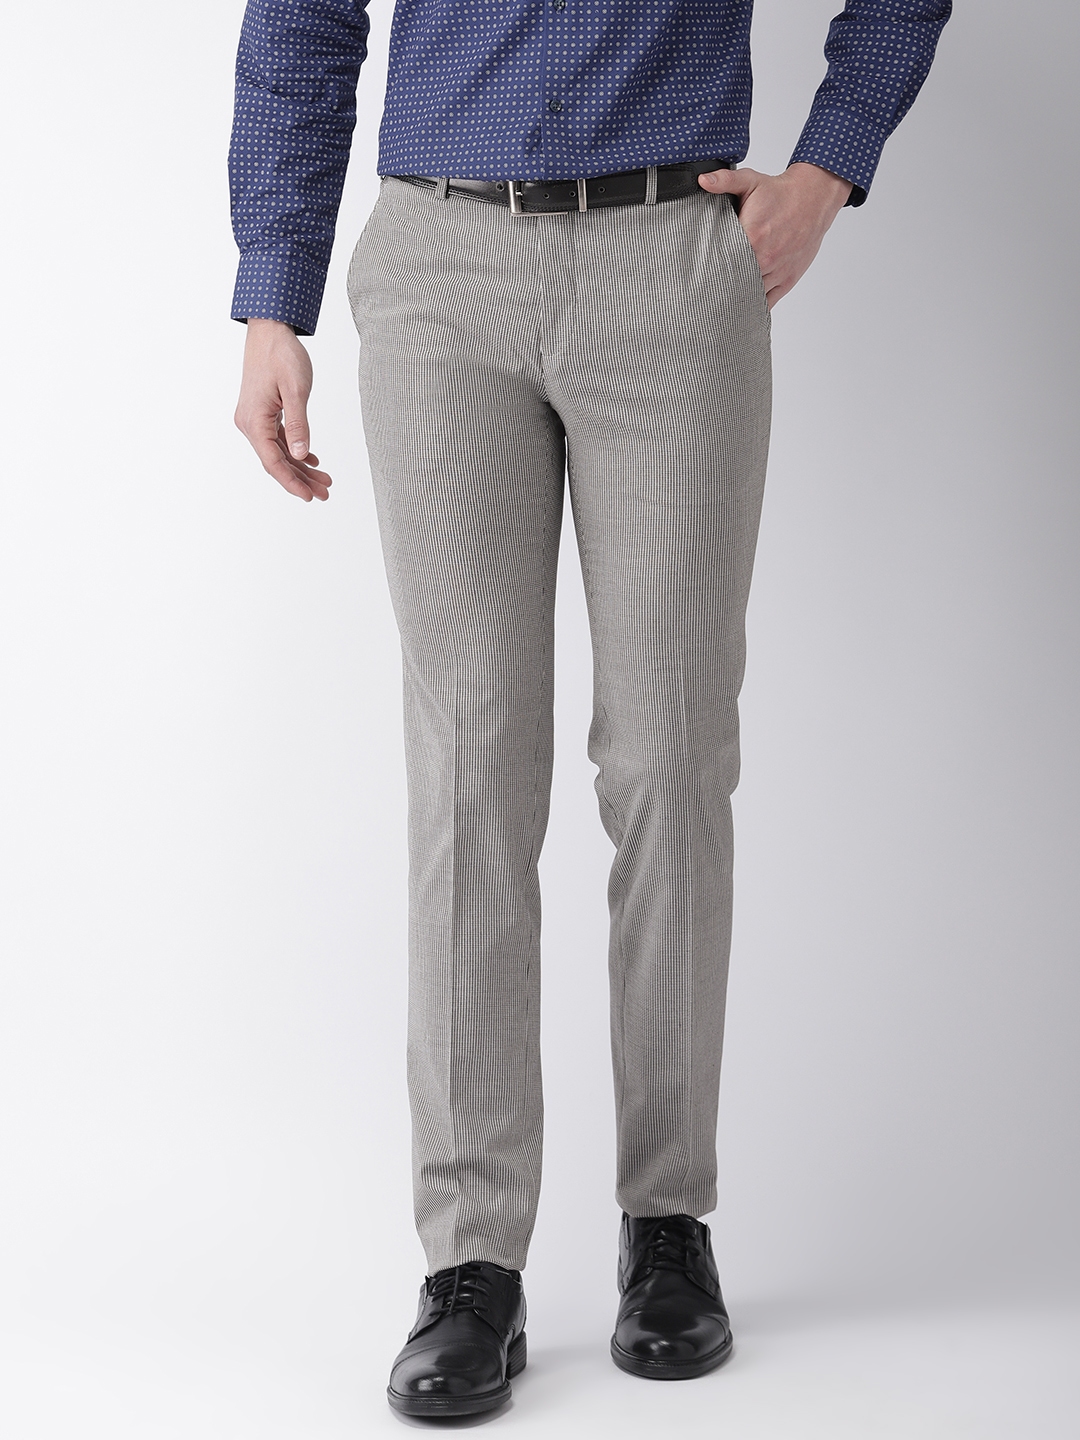 Buy Raymond Dark Blue Trouser Size 30RMTS02829B6 at Amazonin